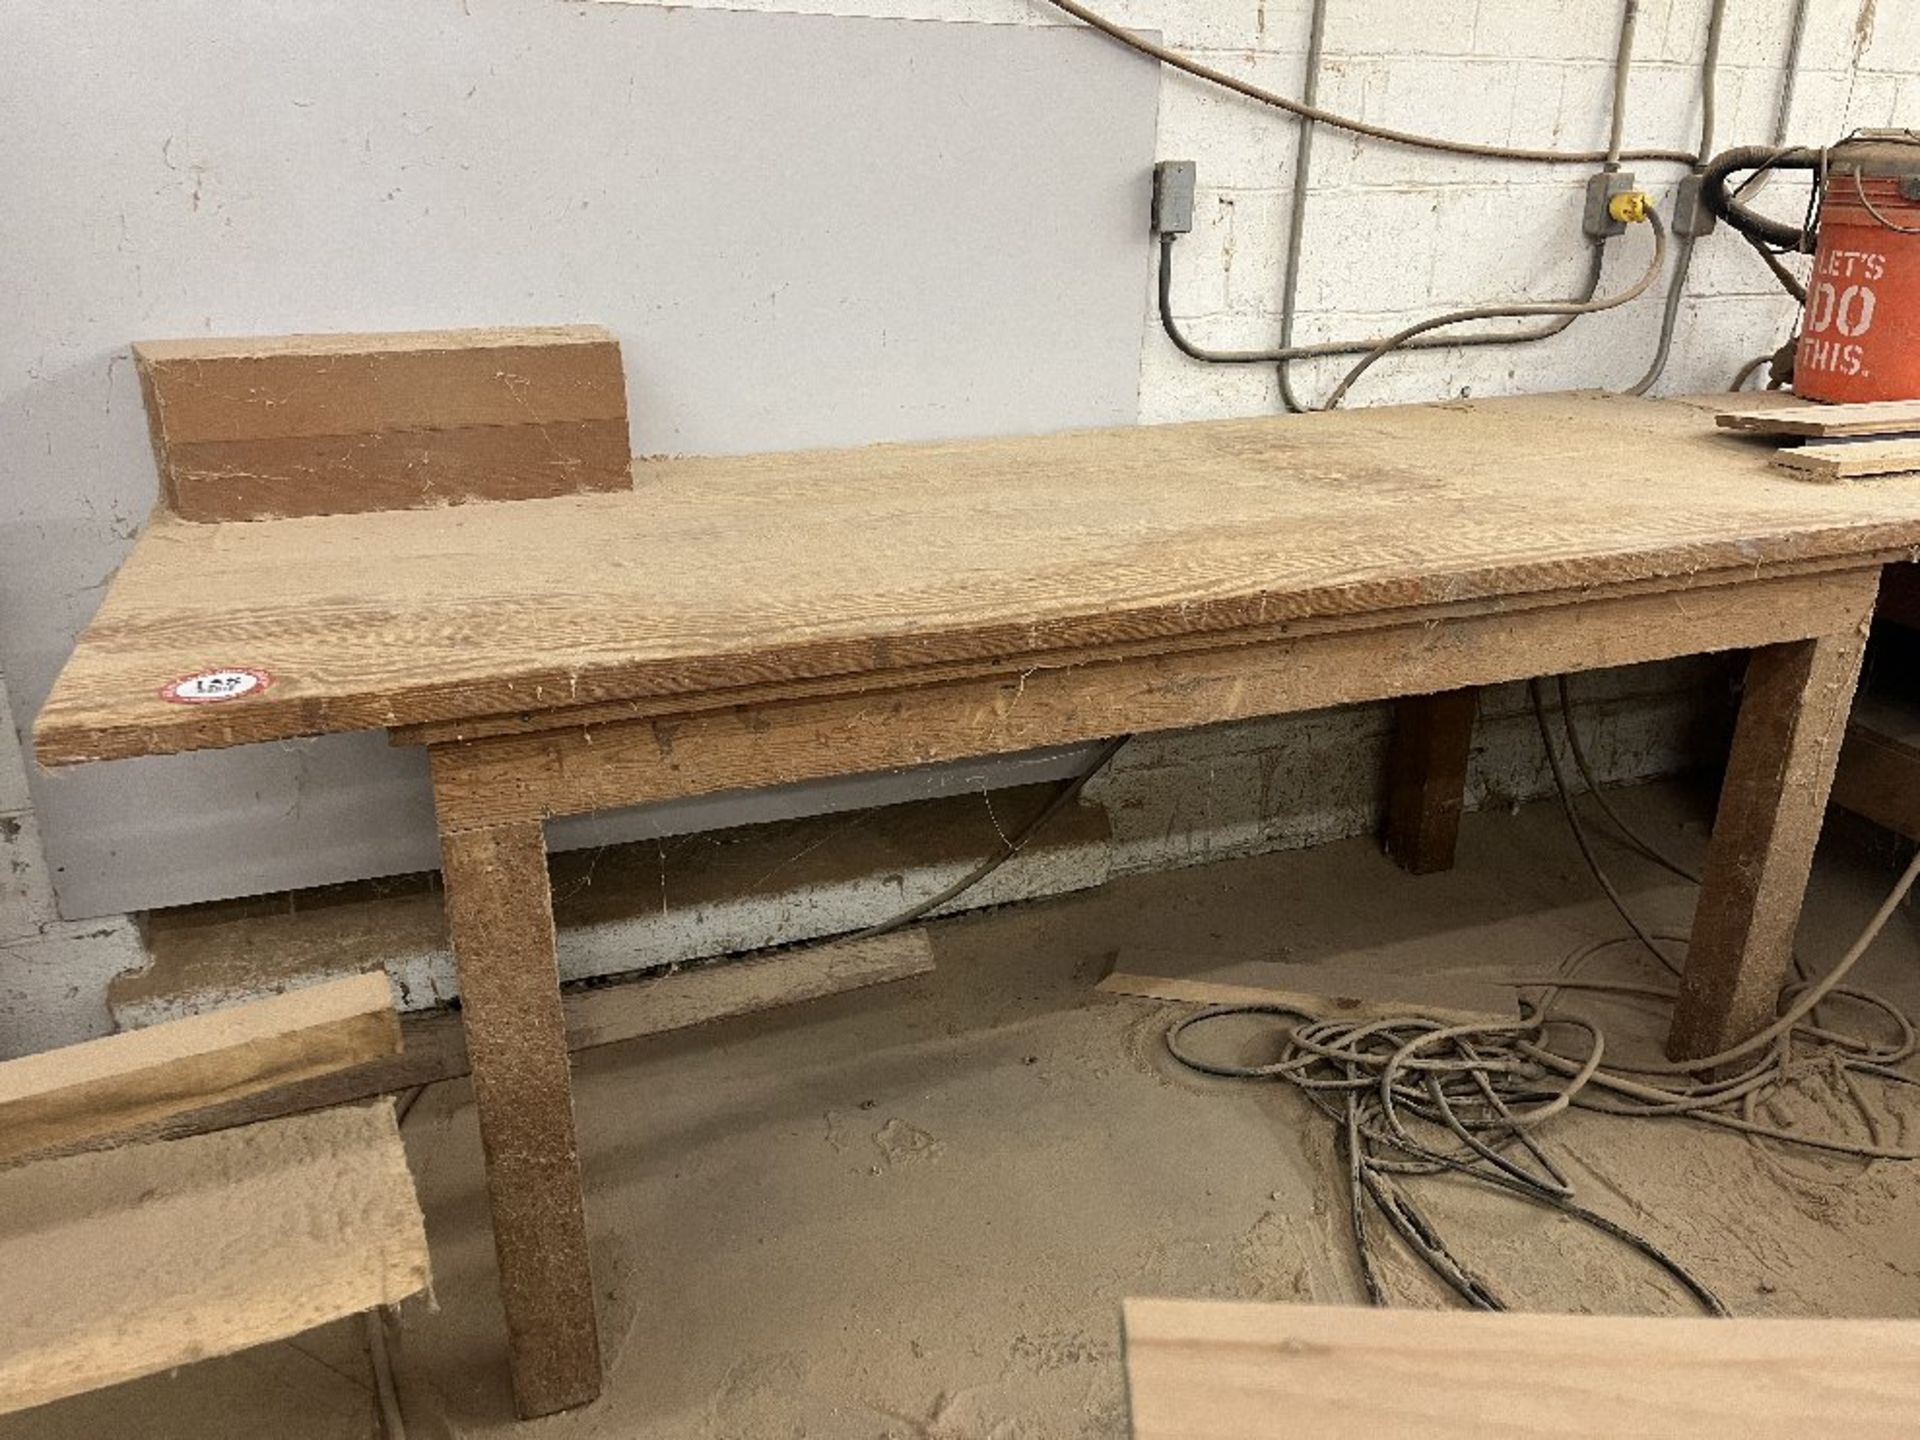 Two Custom Built Wooden Shop Work Tables, 90"l x 30"d x 34"h